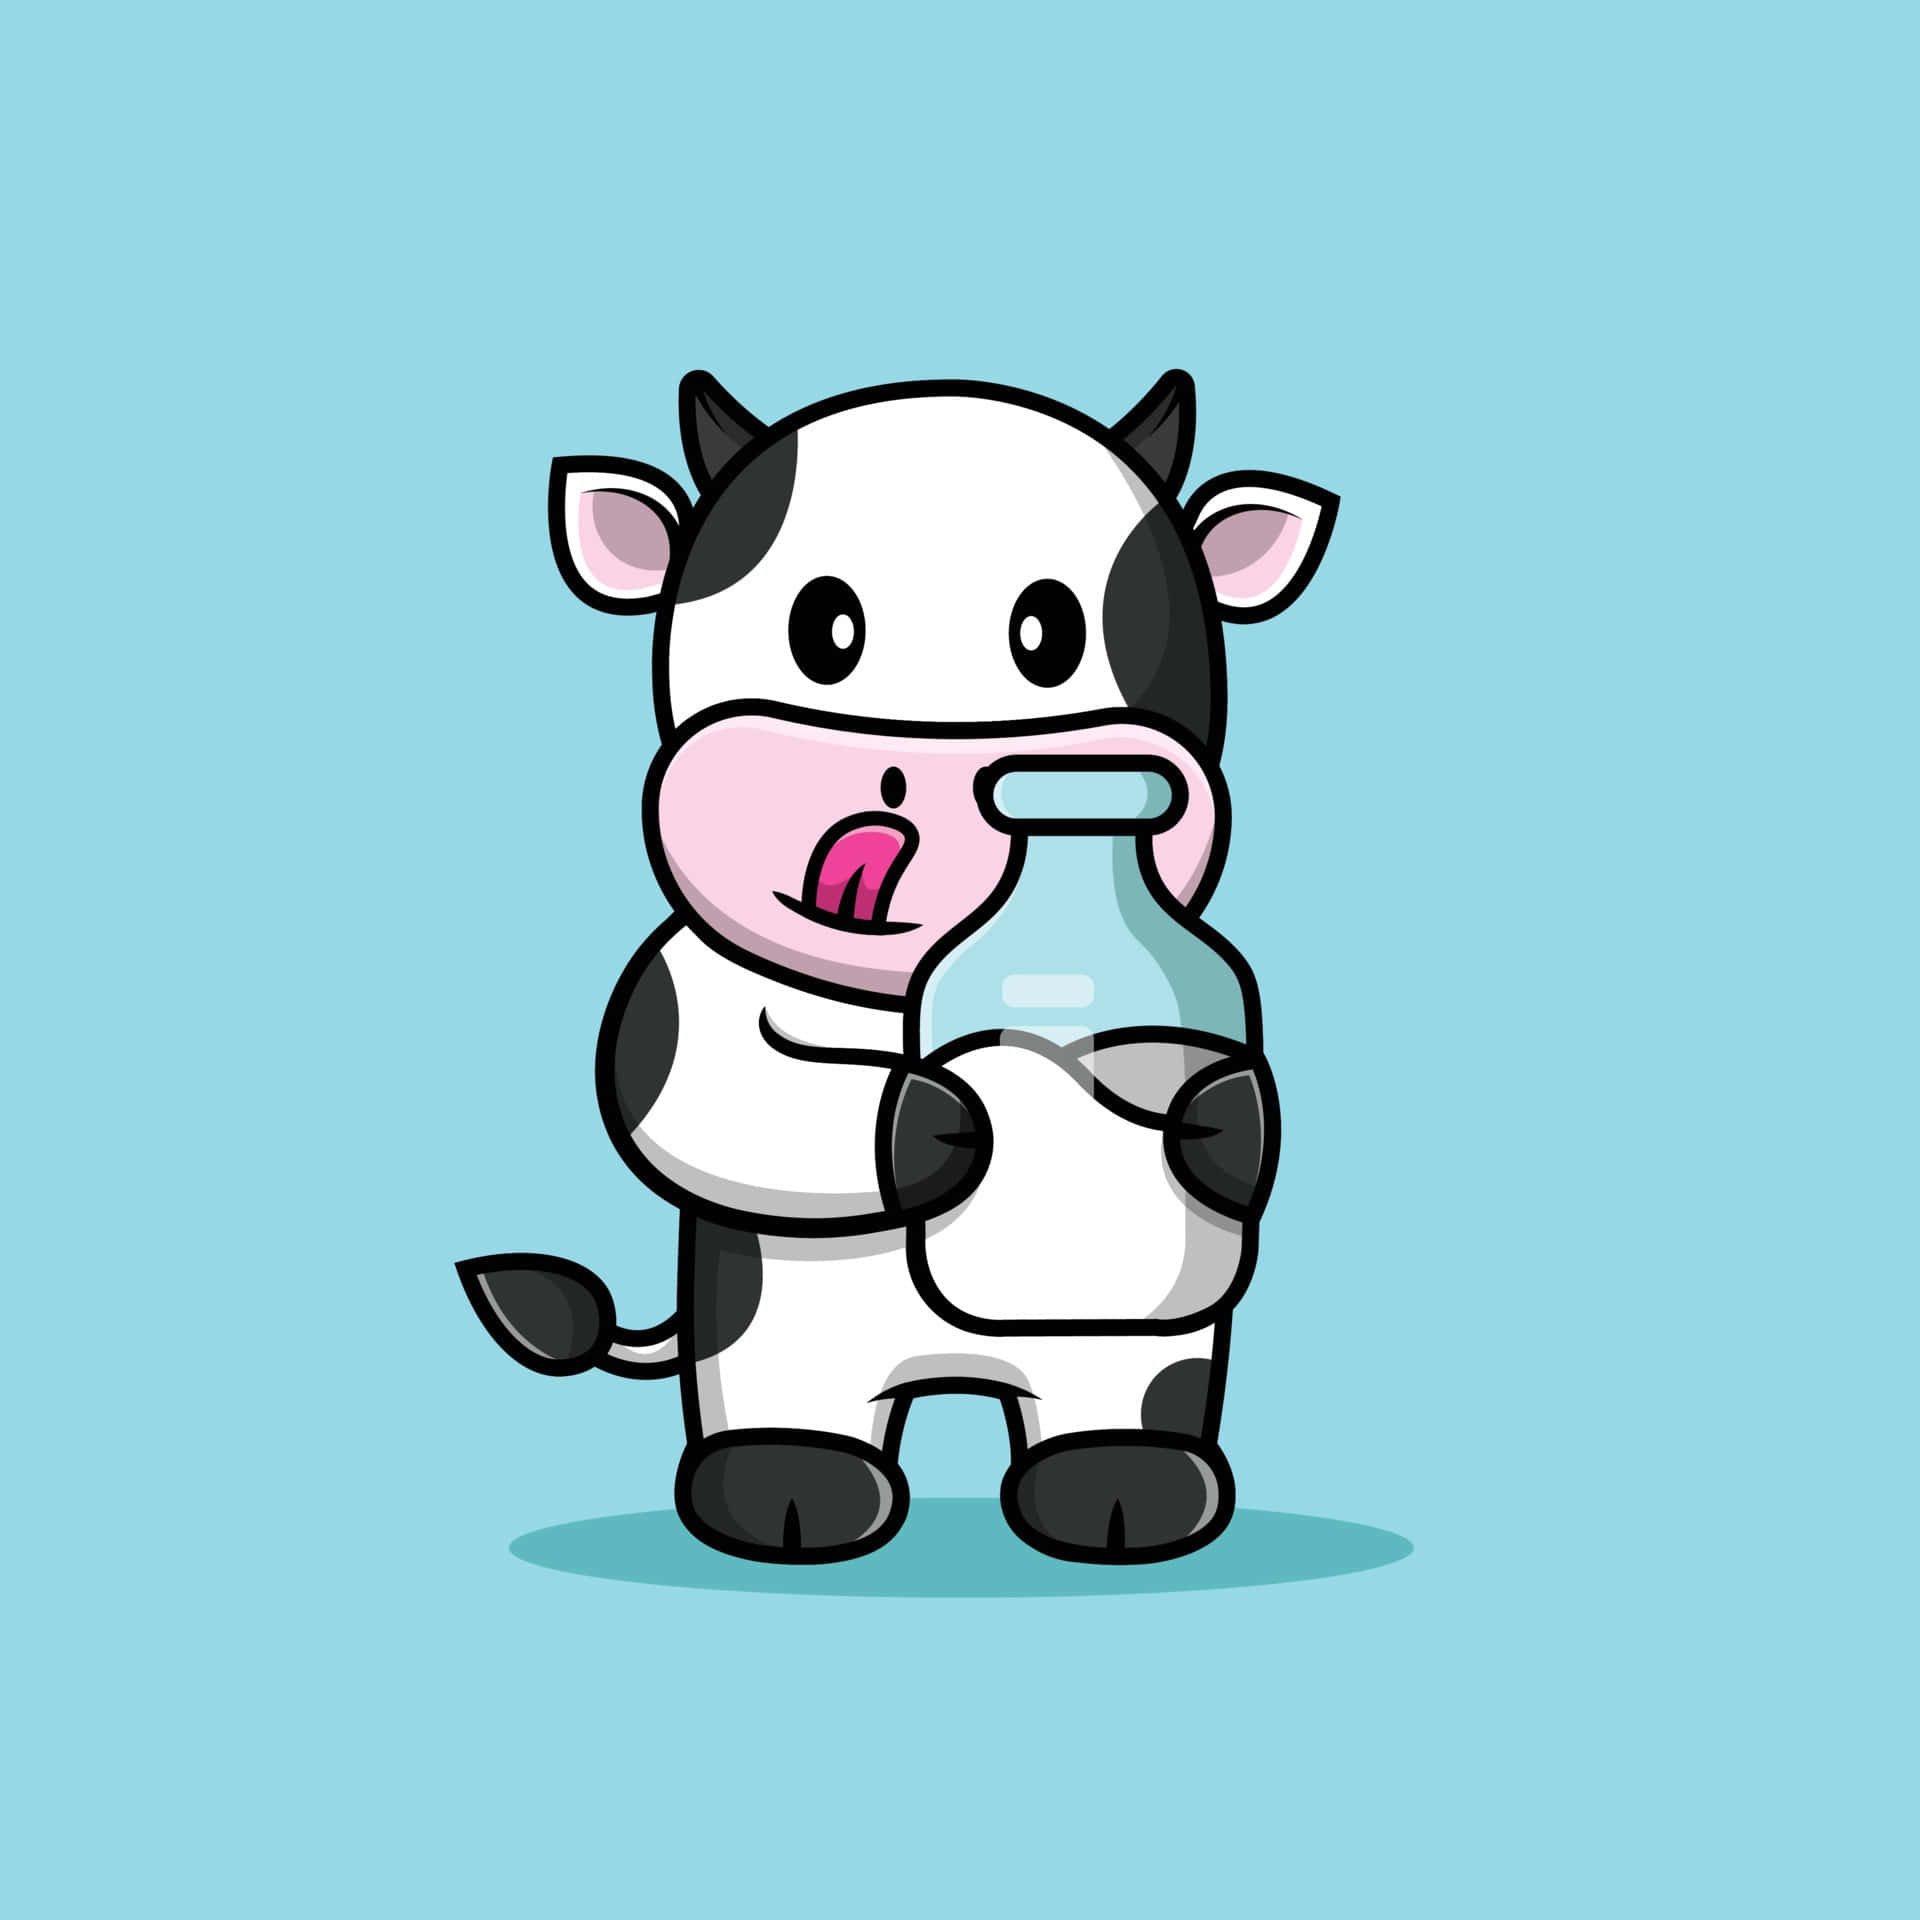 A Cartoon Cow Holding A Bottle Of Milk